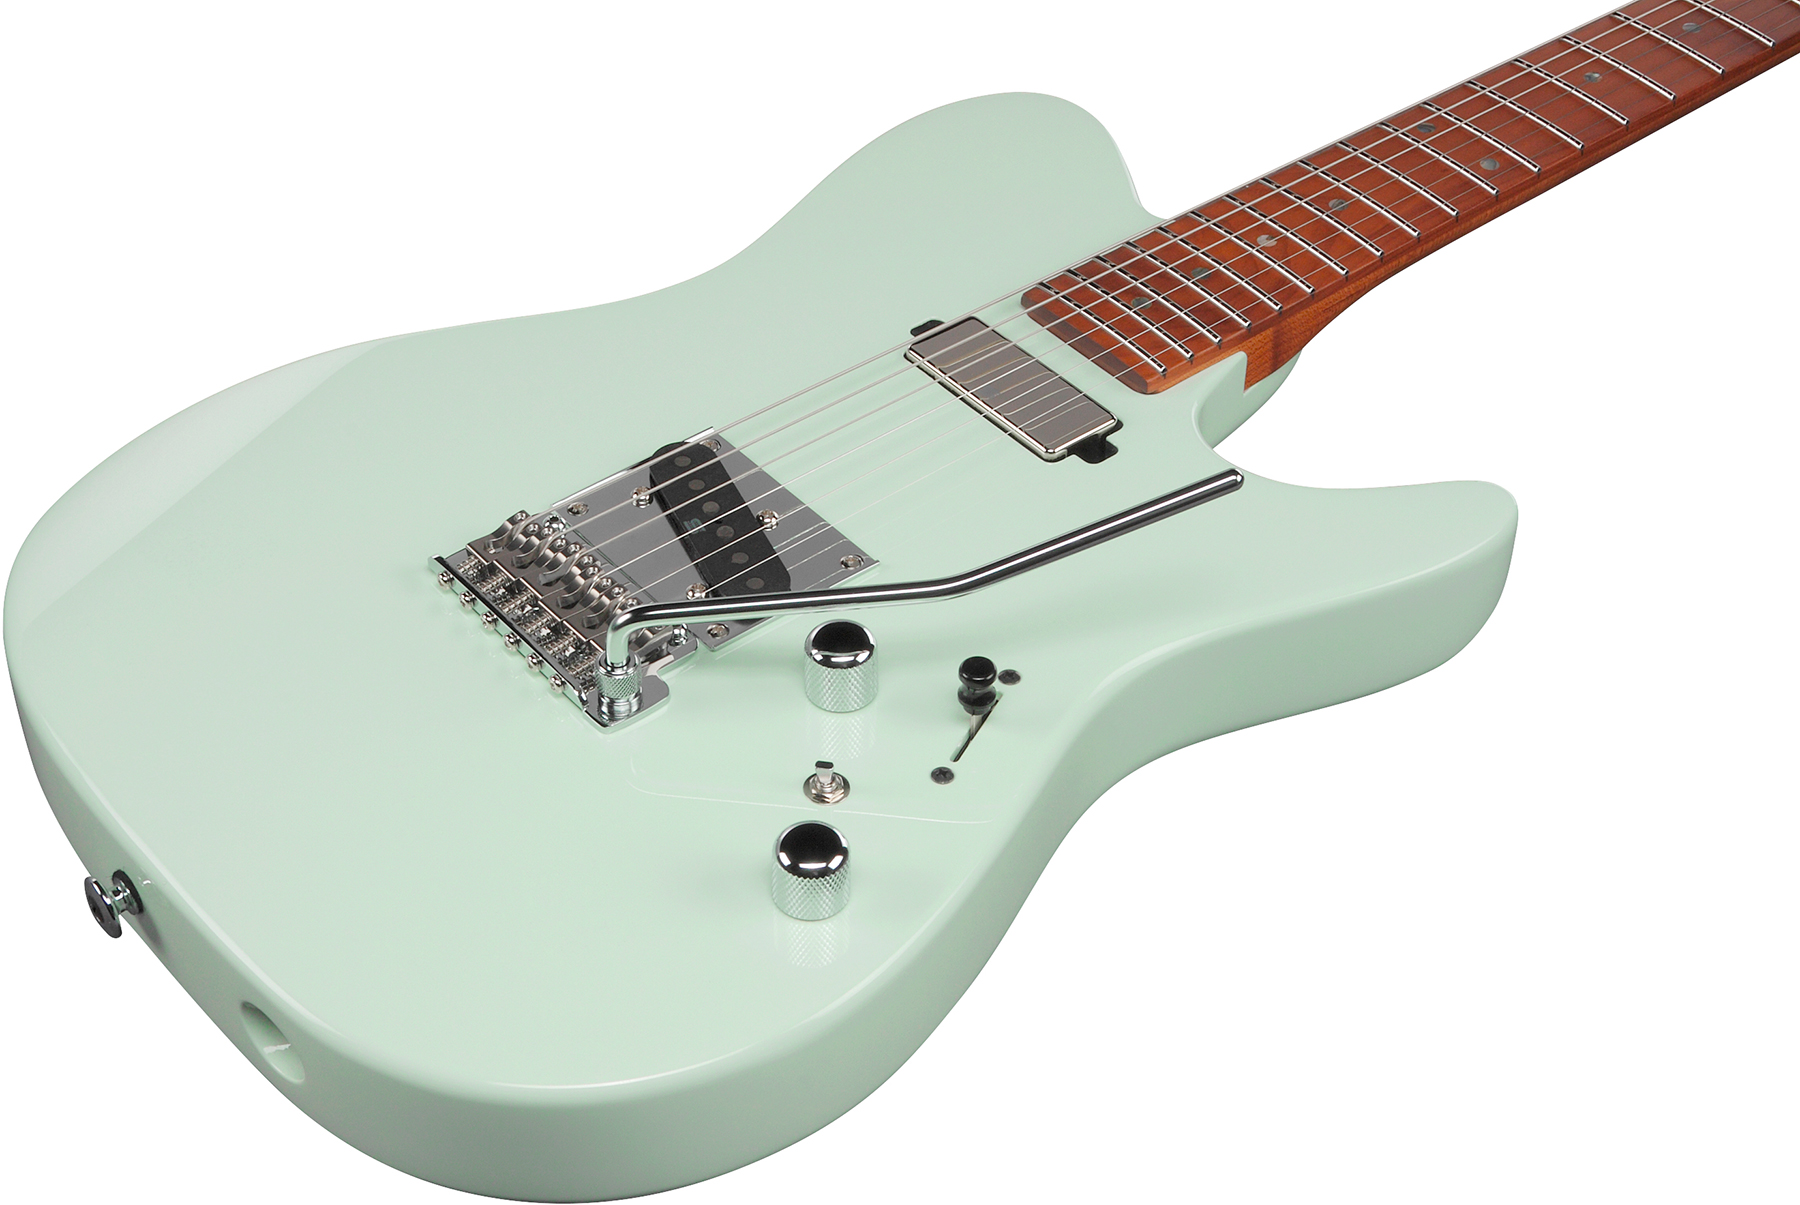 Ibanez Azs2200 Mgr Prestige Jap Smh Seymour Duncan Trem Mn - Mint Green - Guitarra eléctrica con forma de tel - Variation 2